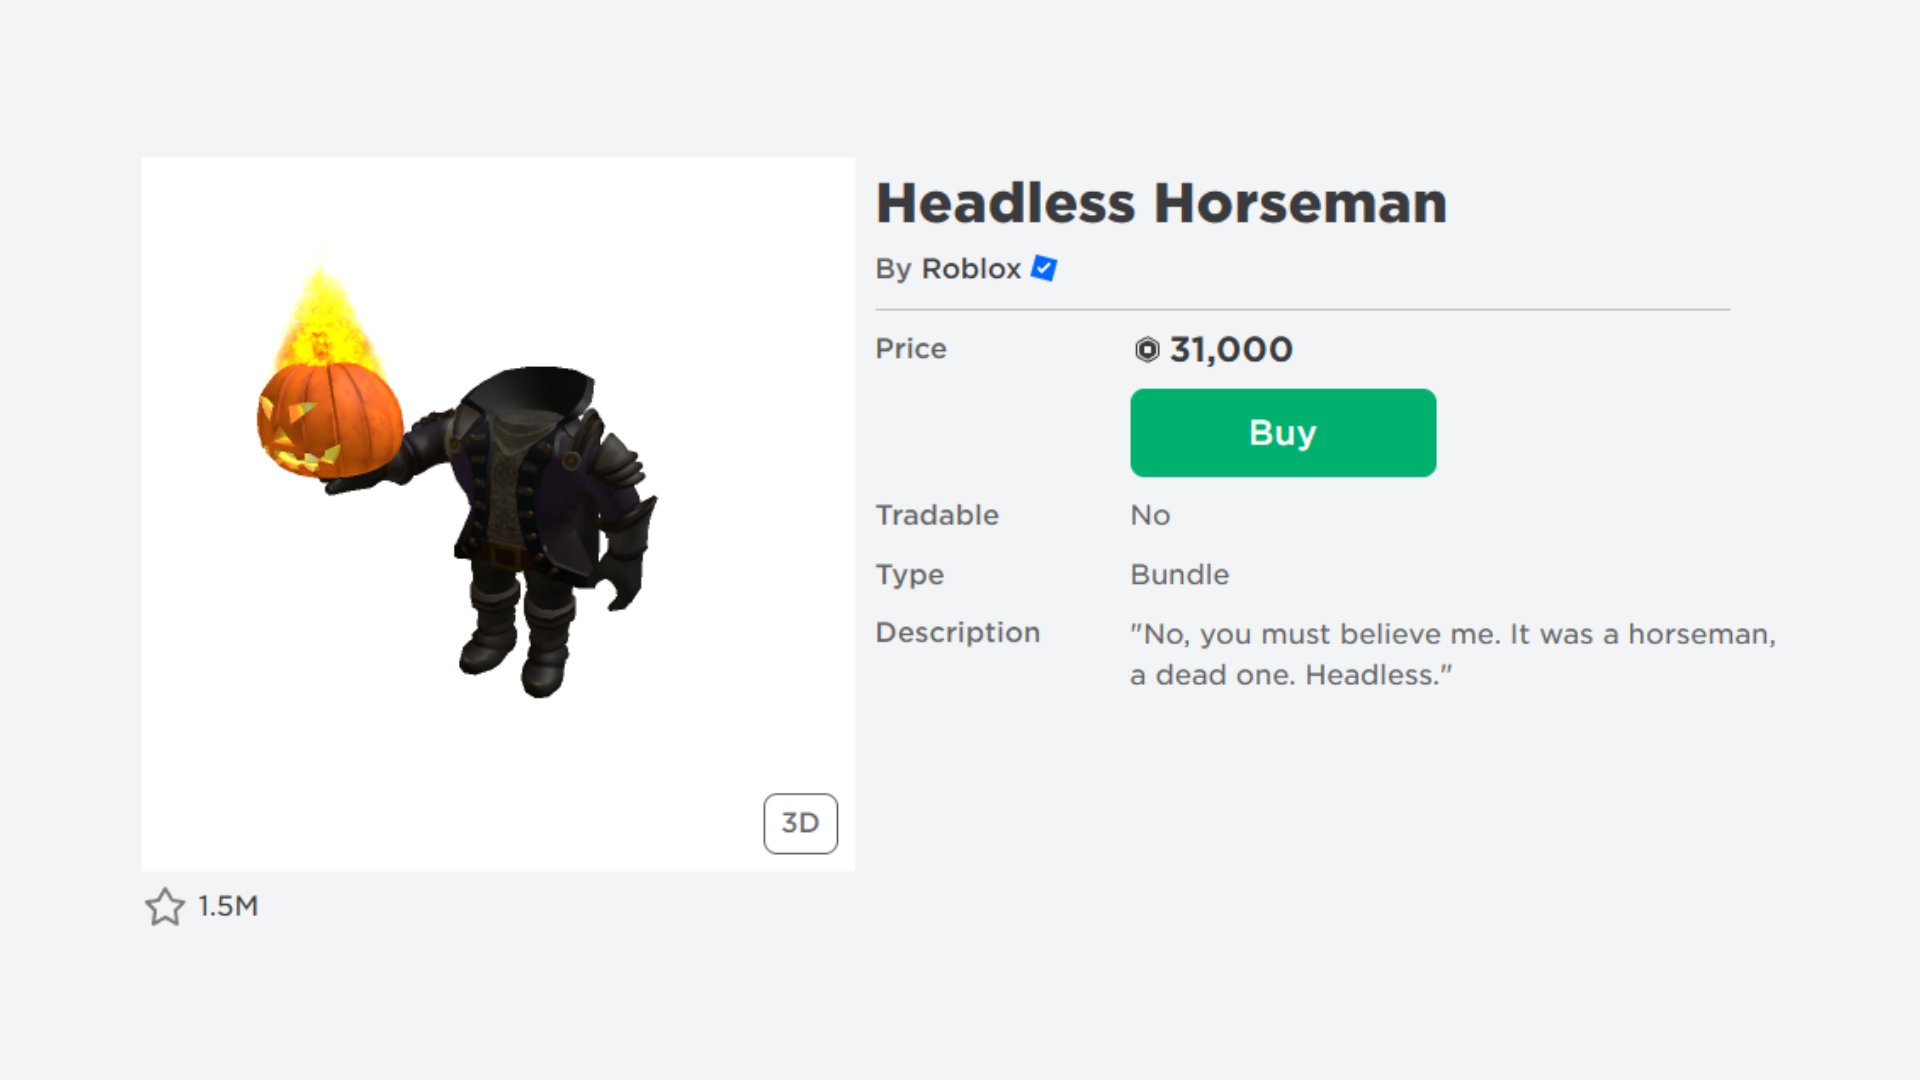 BUYING HEADLESS HORSEMAN. (31K ROBUX) 